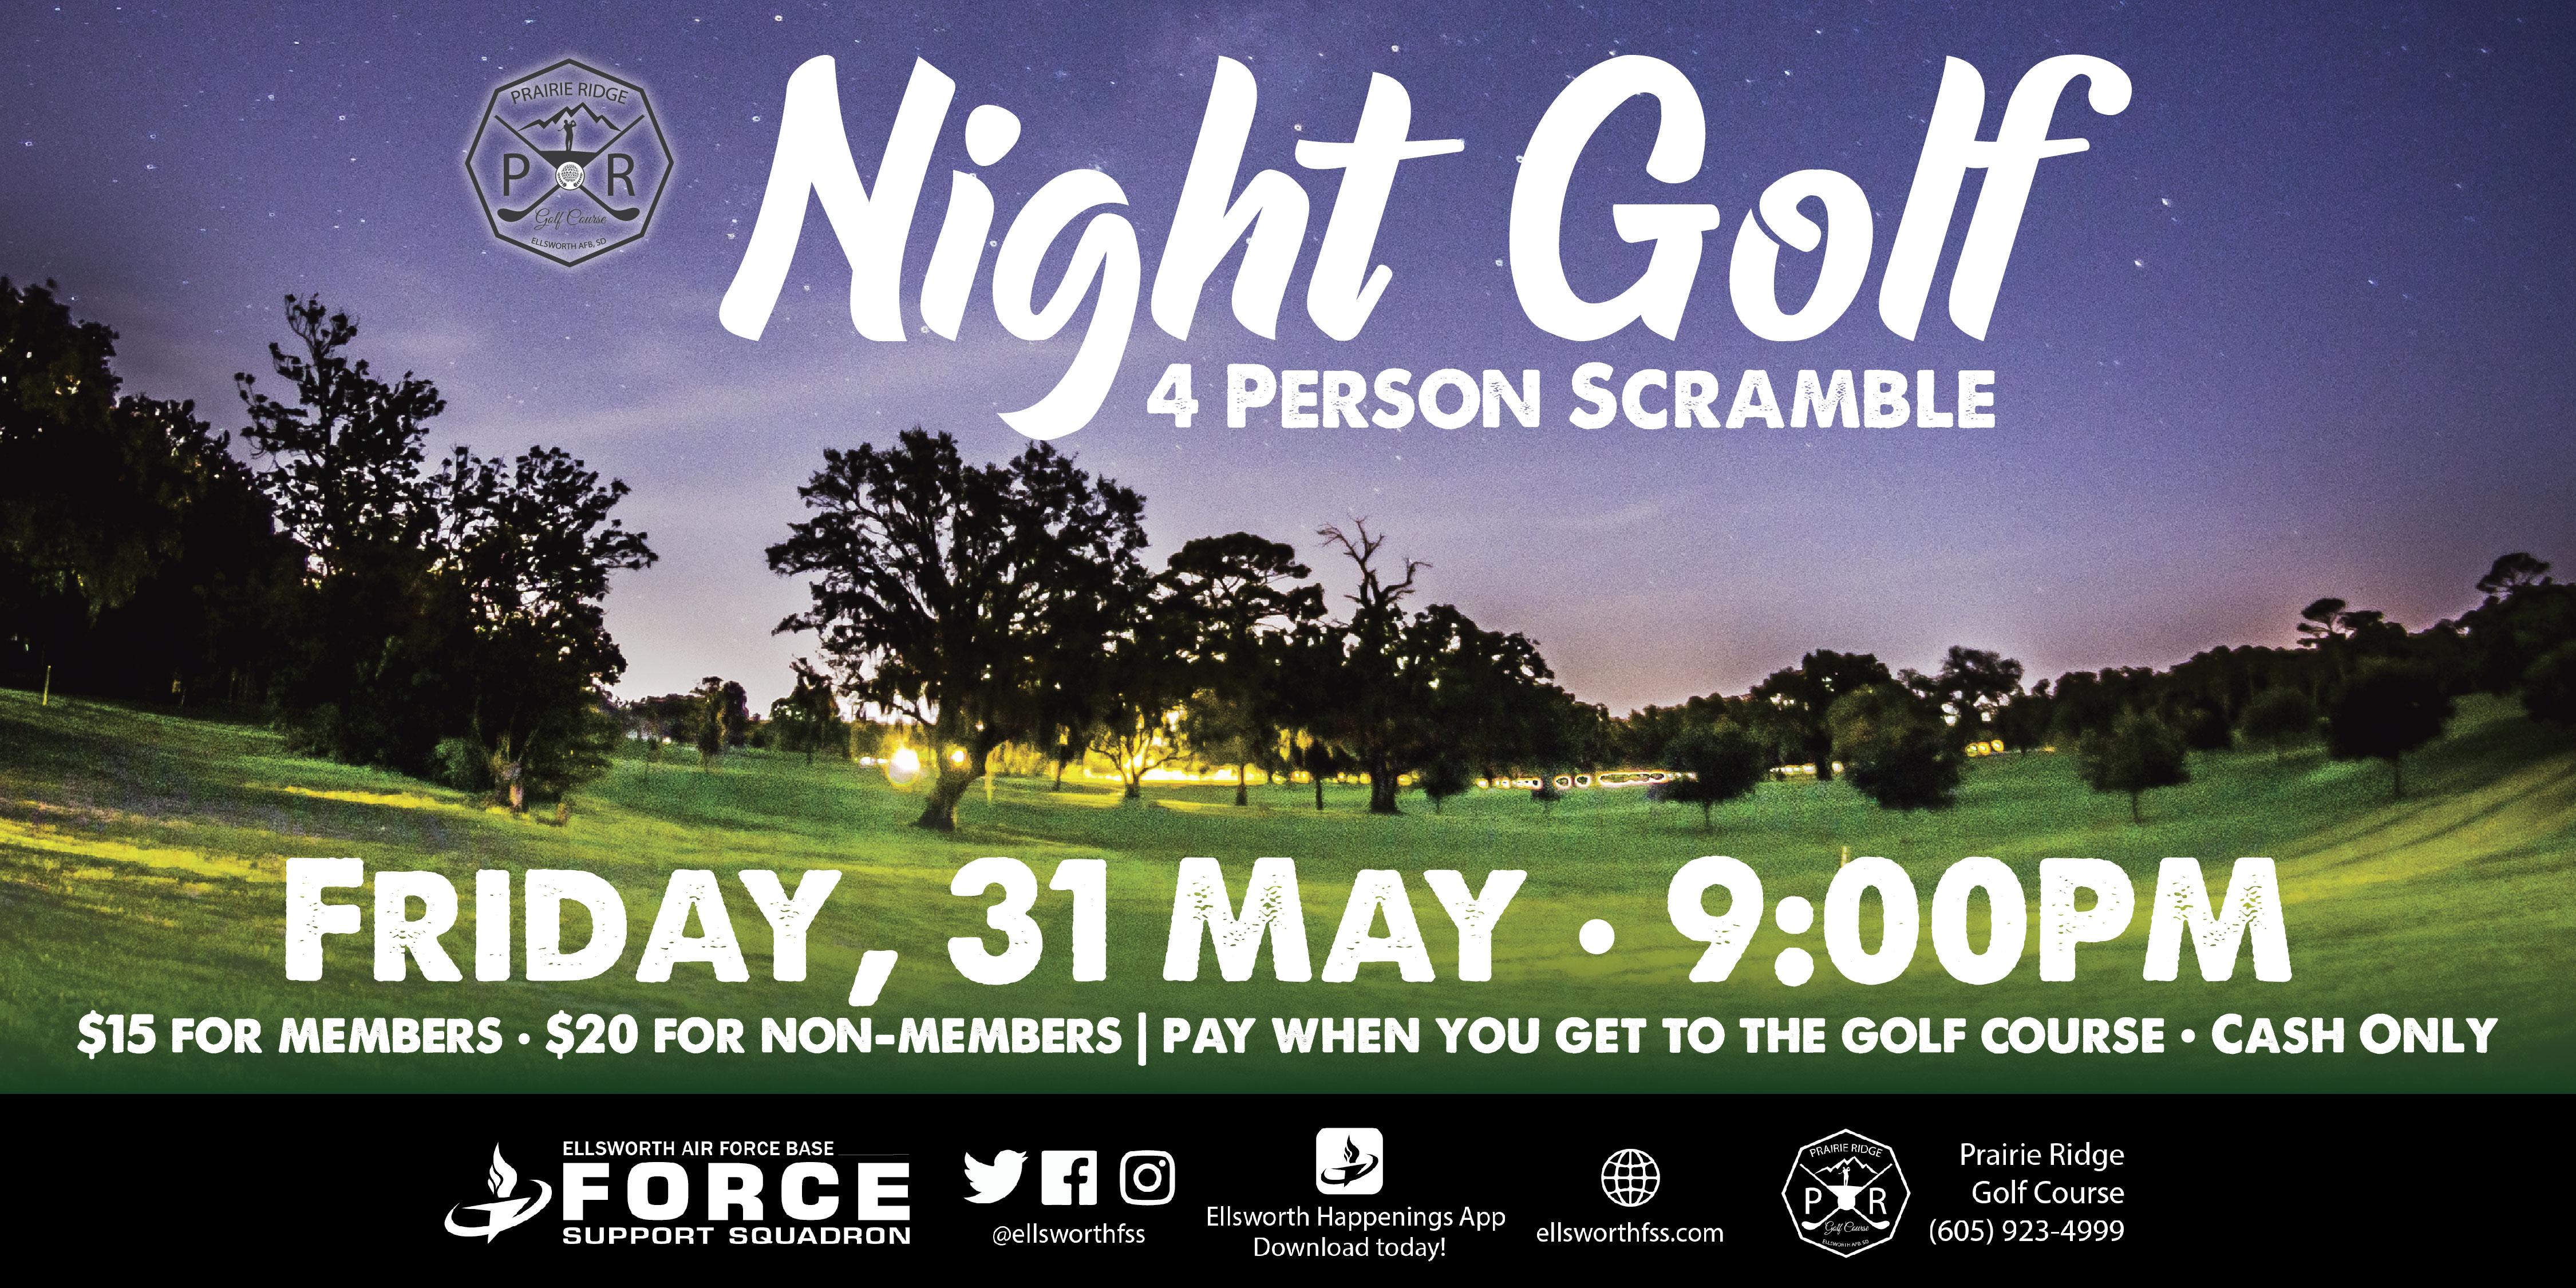 PRGC - Night Golf - 4 person Scramble